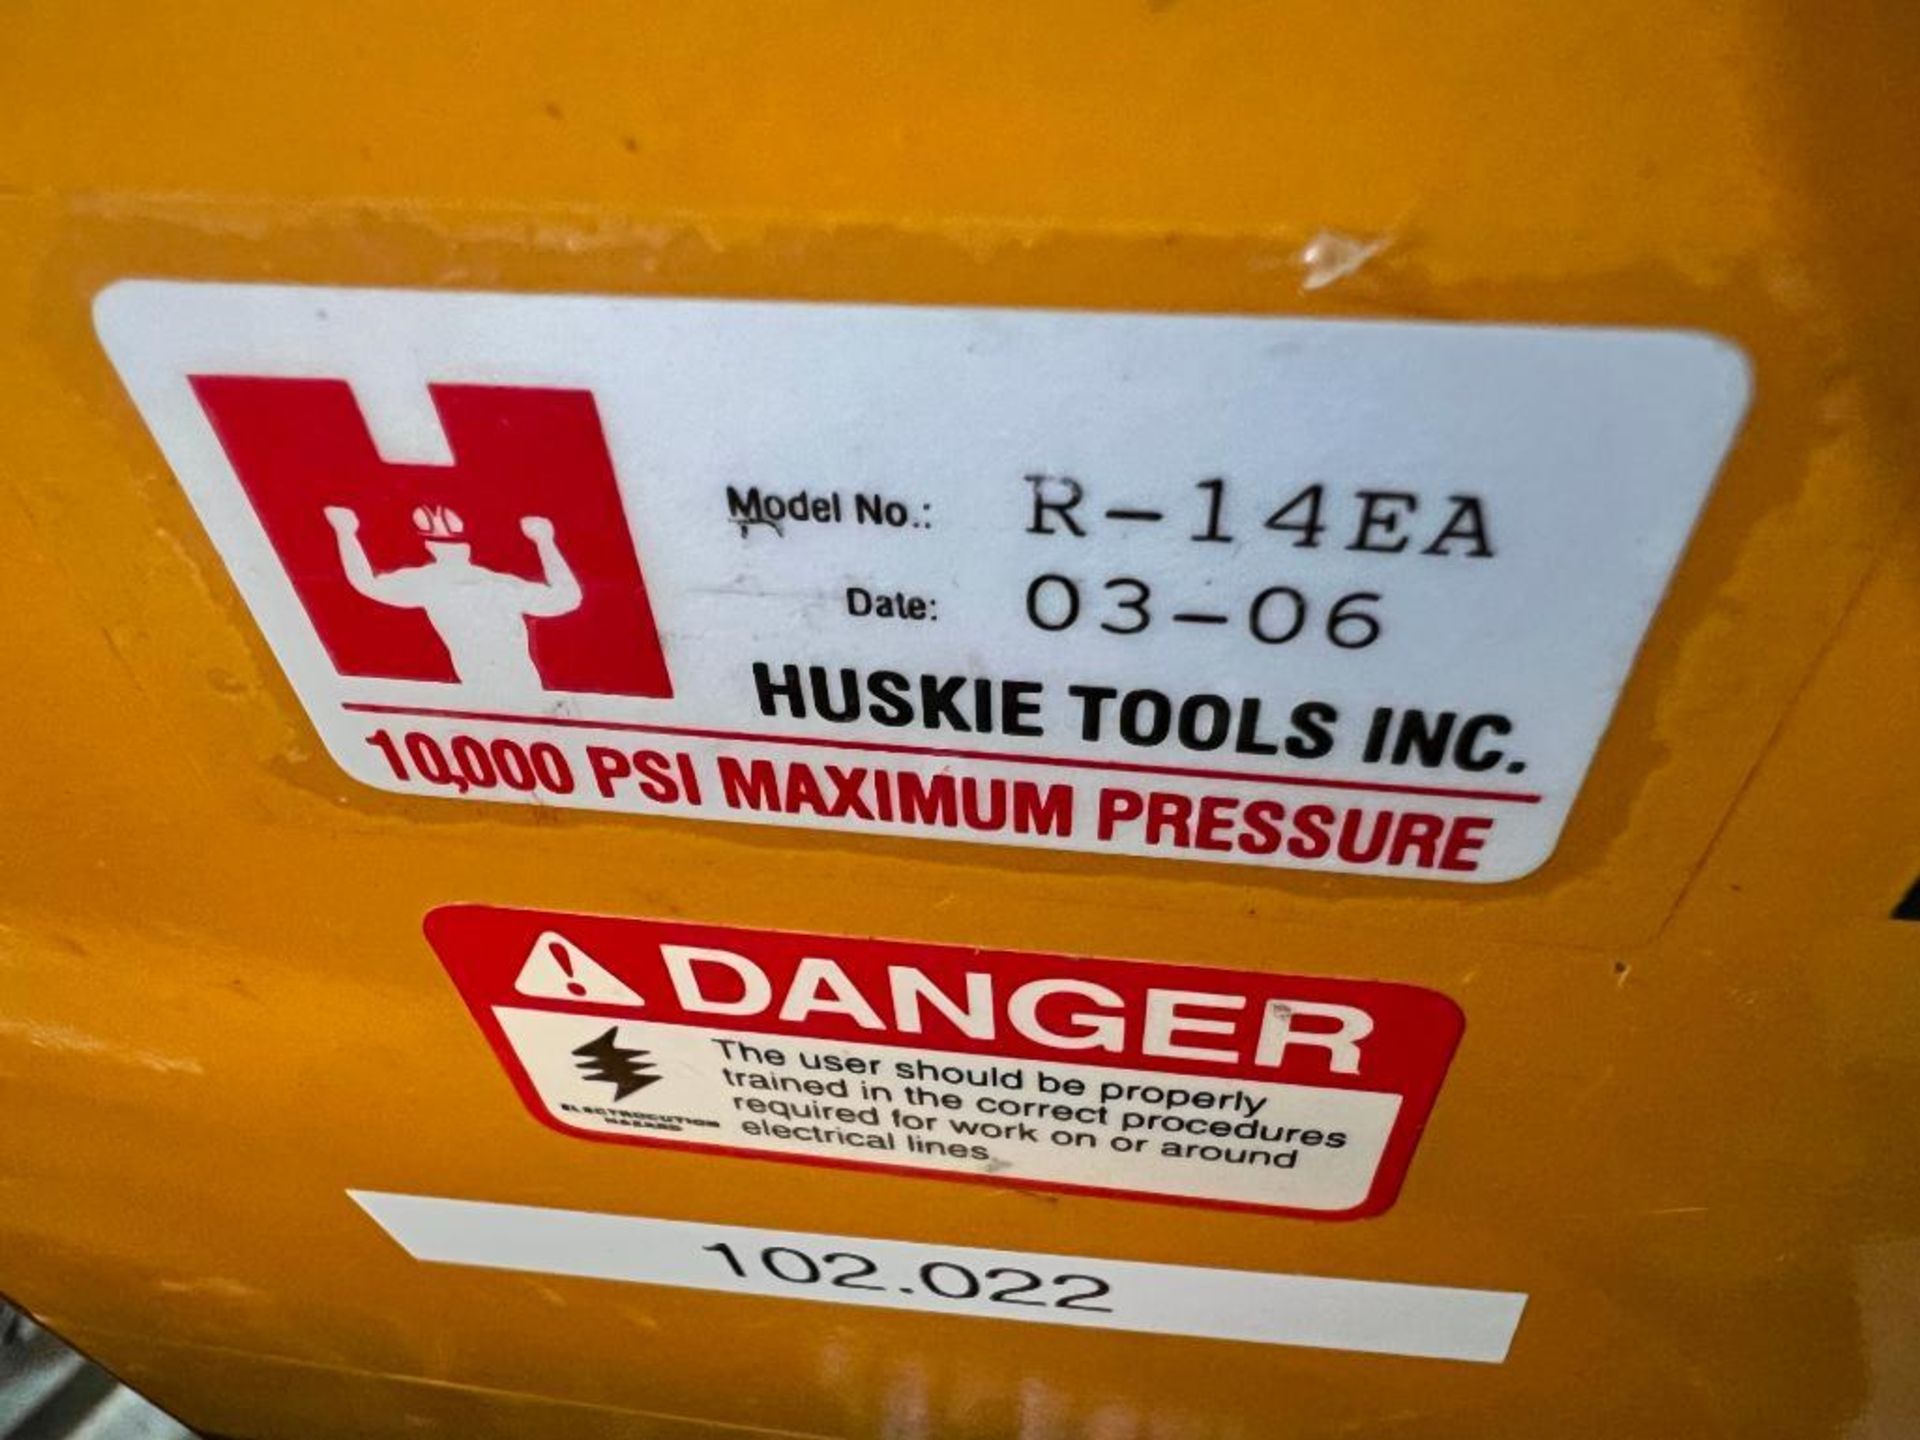 Huskie Tools Hydraulic Pump, 3/4 HP, 10,000 PSI Max. Pressure, Model R-14EA - Image 3 of 3